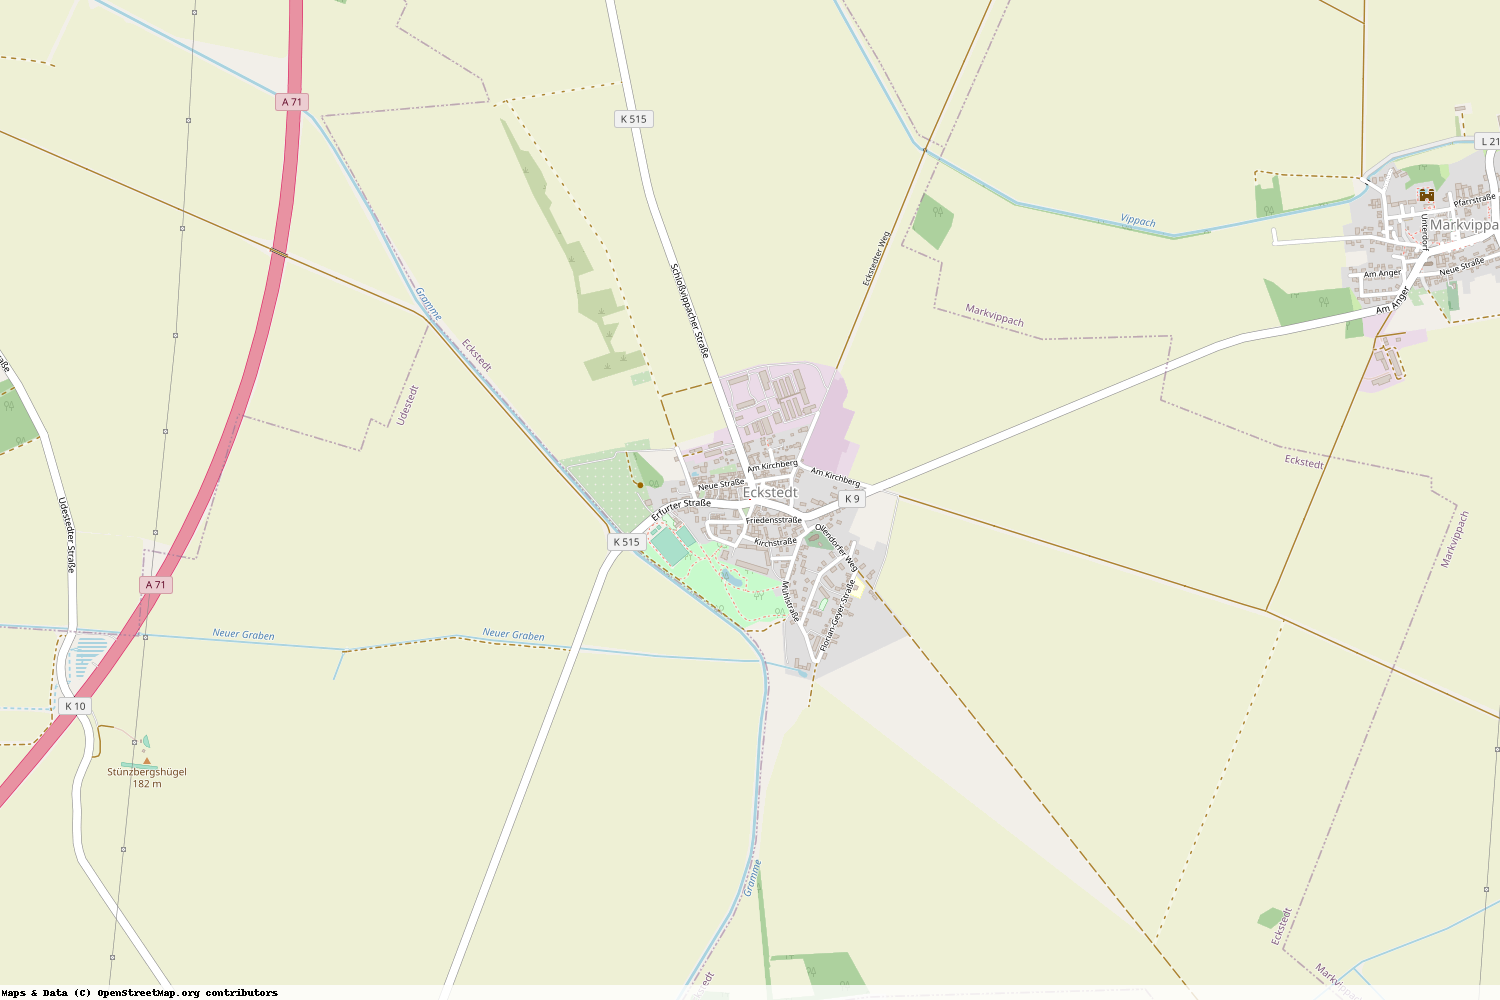 Ist gerade Stromausfall in Thüringen - Sömmerda - Eckstedt?